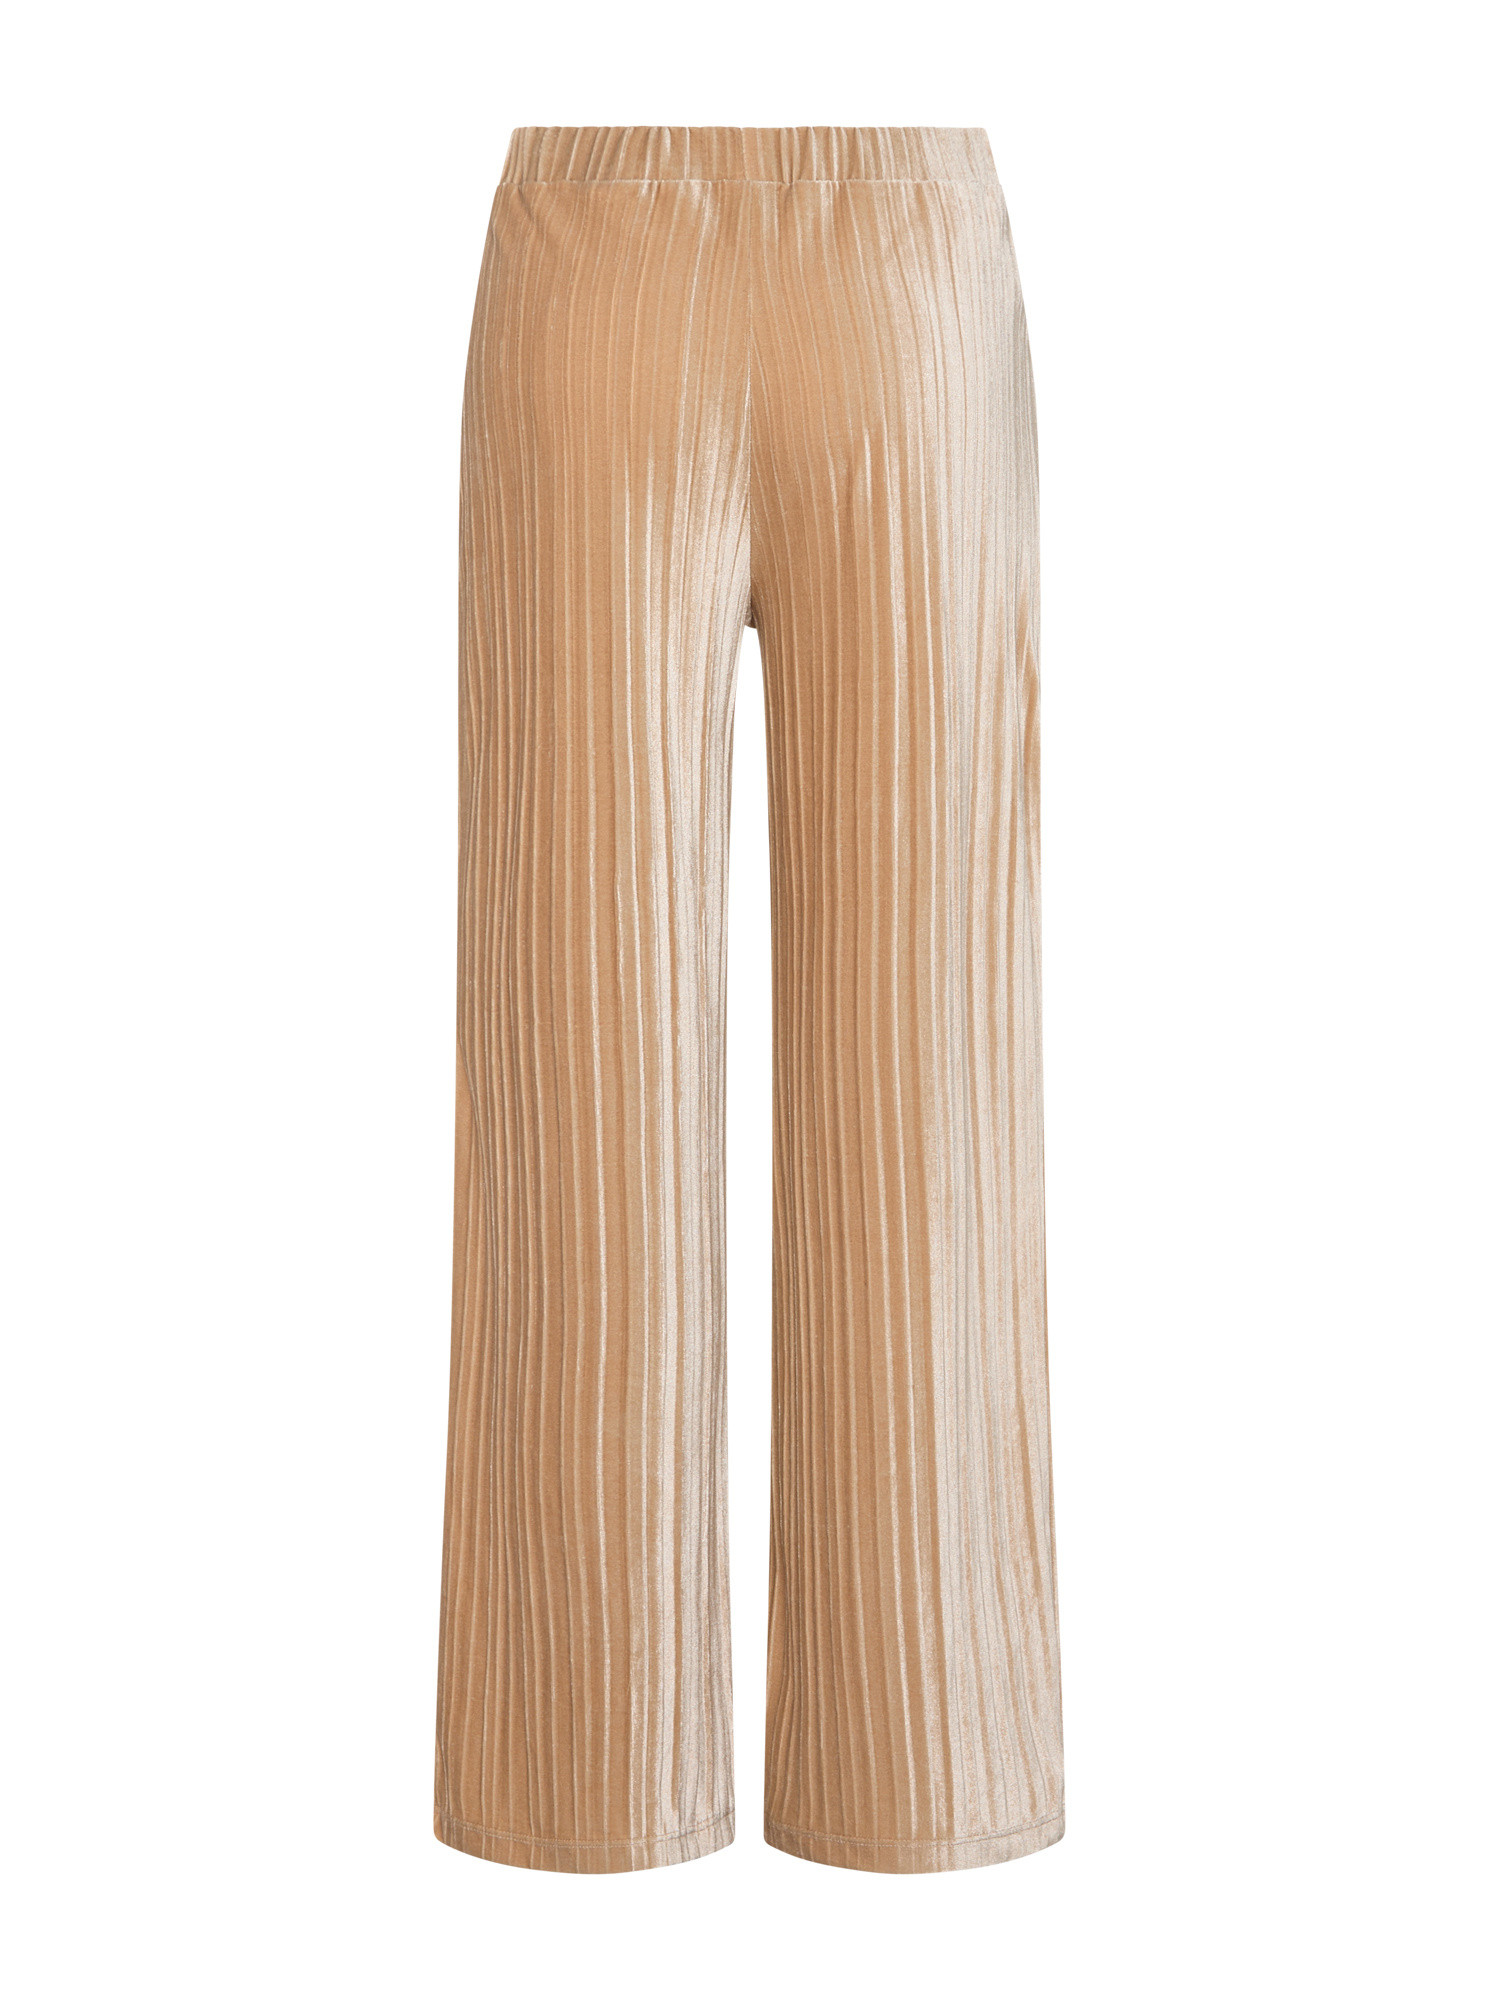 Koan - Pantaloni gamba ampia in velluto effetto plissé, Giallo champagne, large image number 1